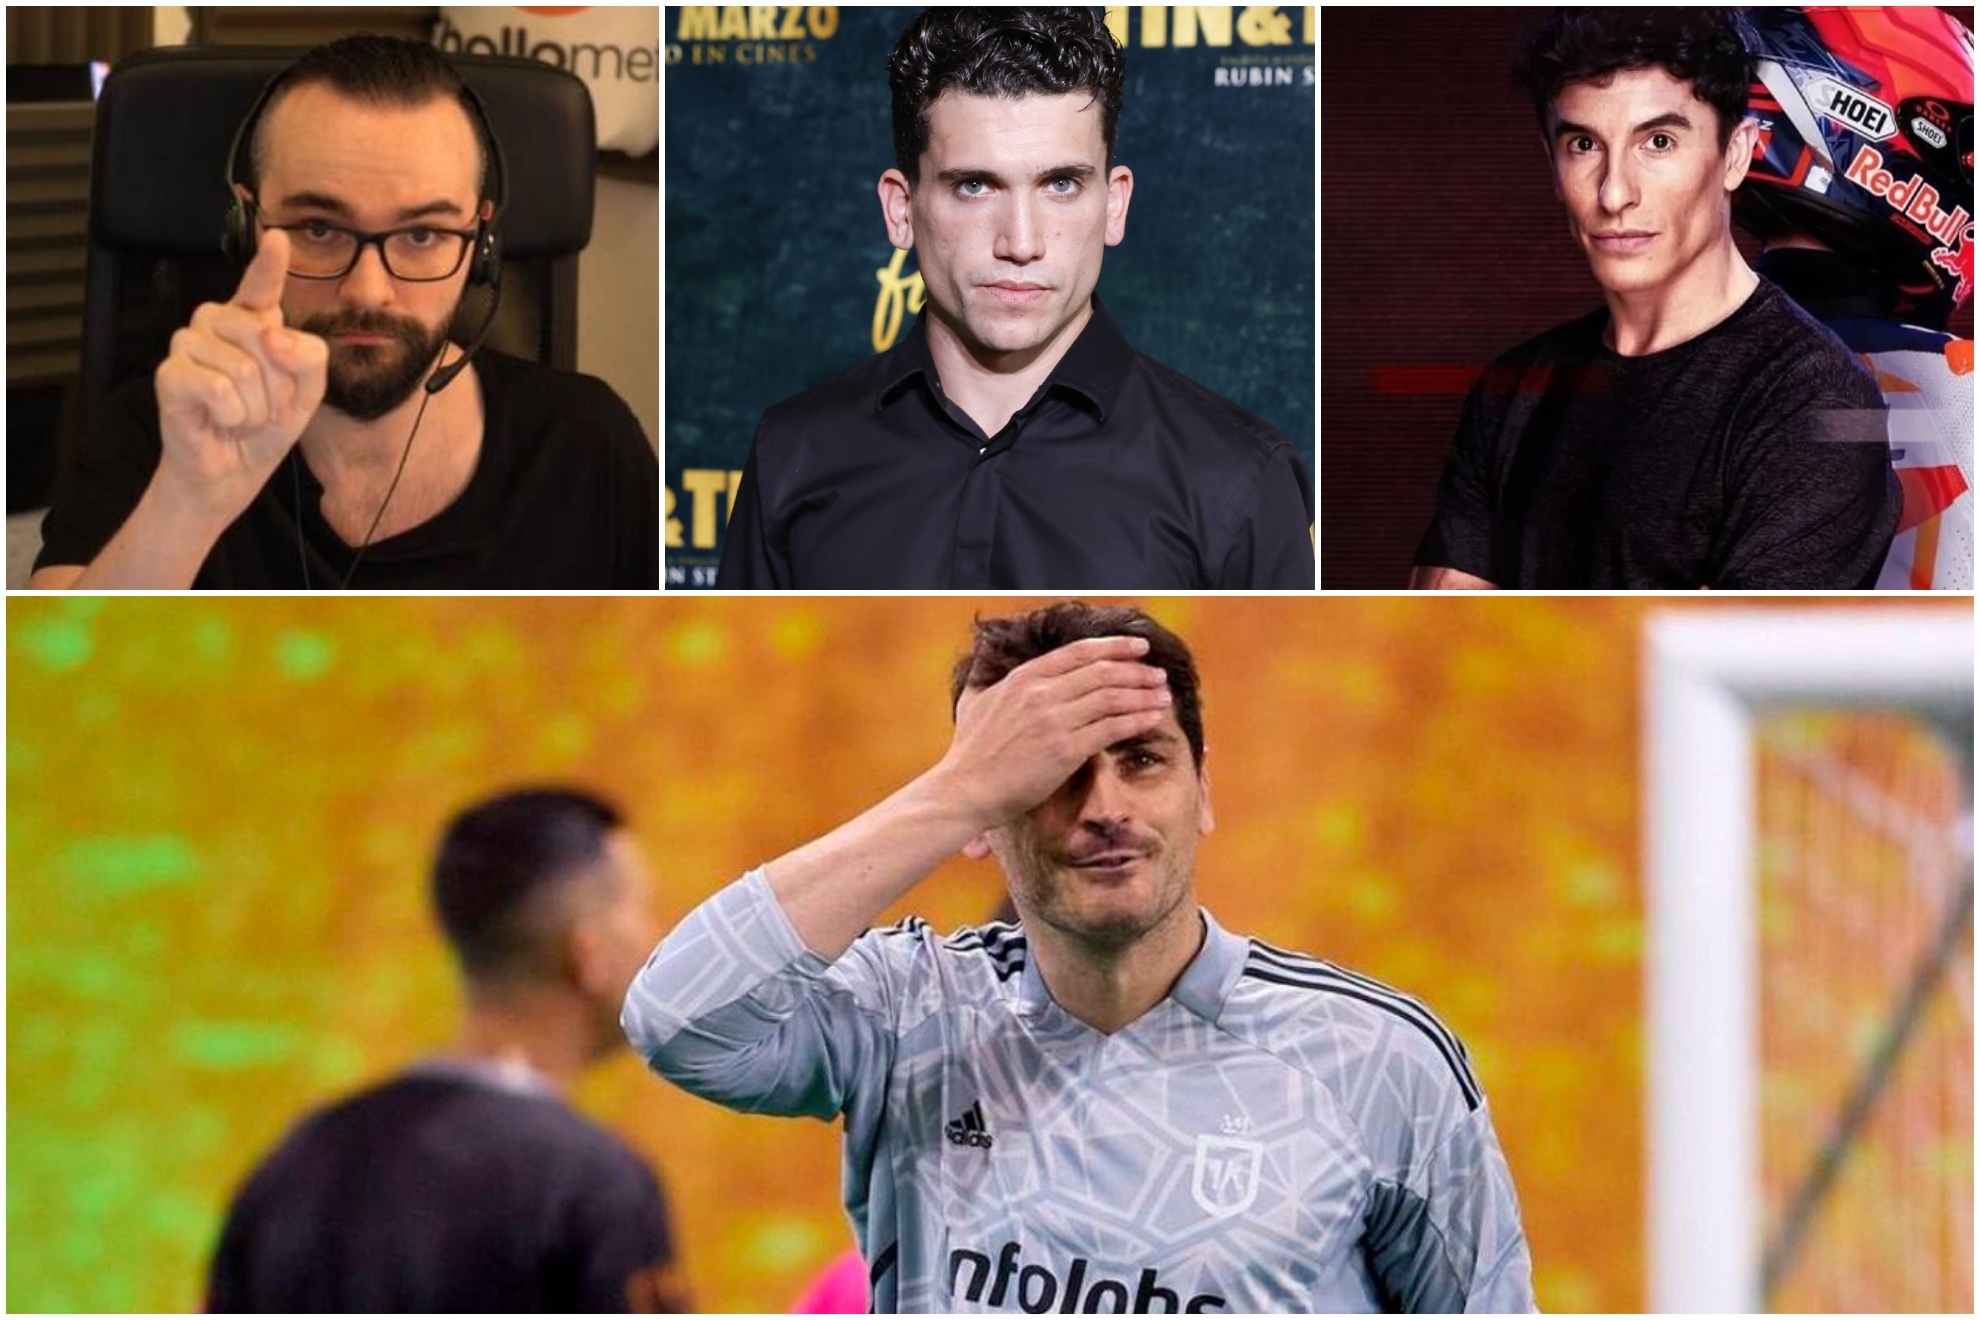 Xokas, Jaime Lorente, Marc Mrquez...las estrellas que se enfrentarn a Casillas en la final de la Kings League